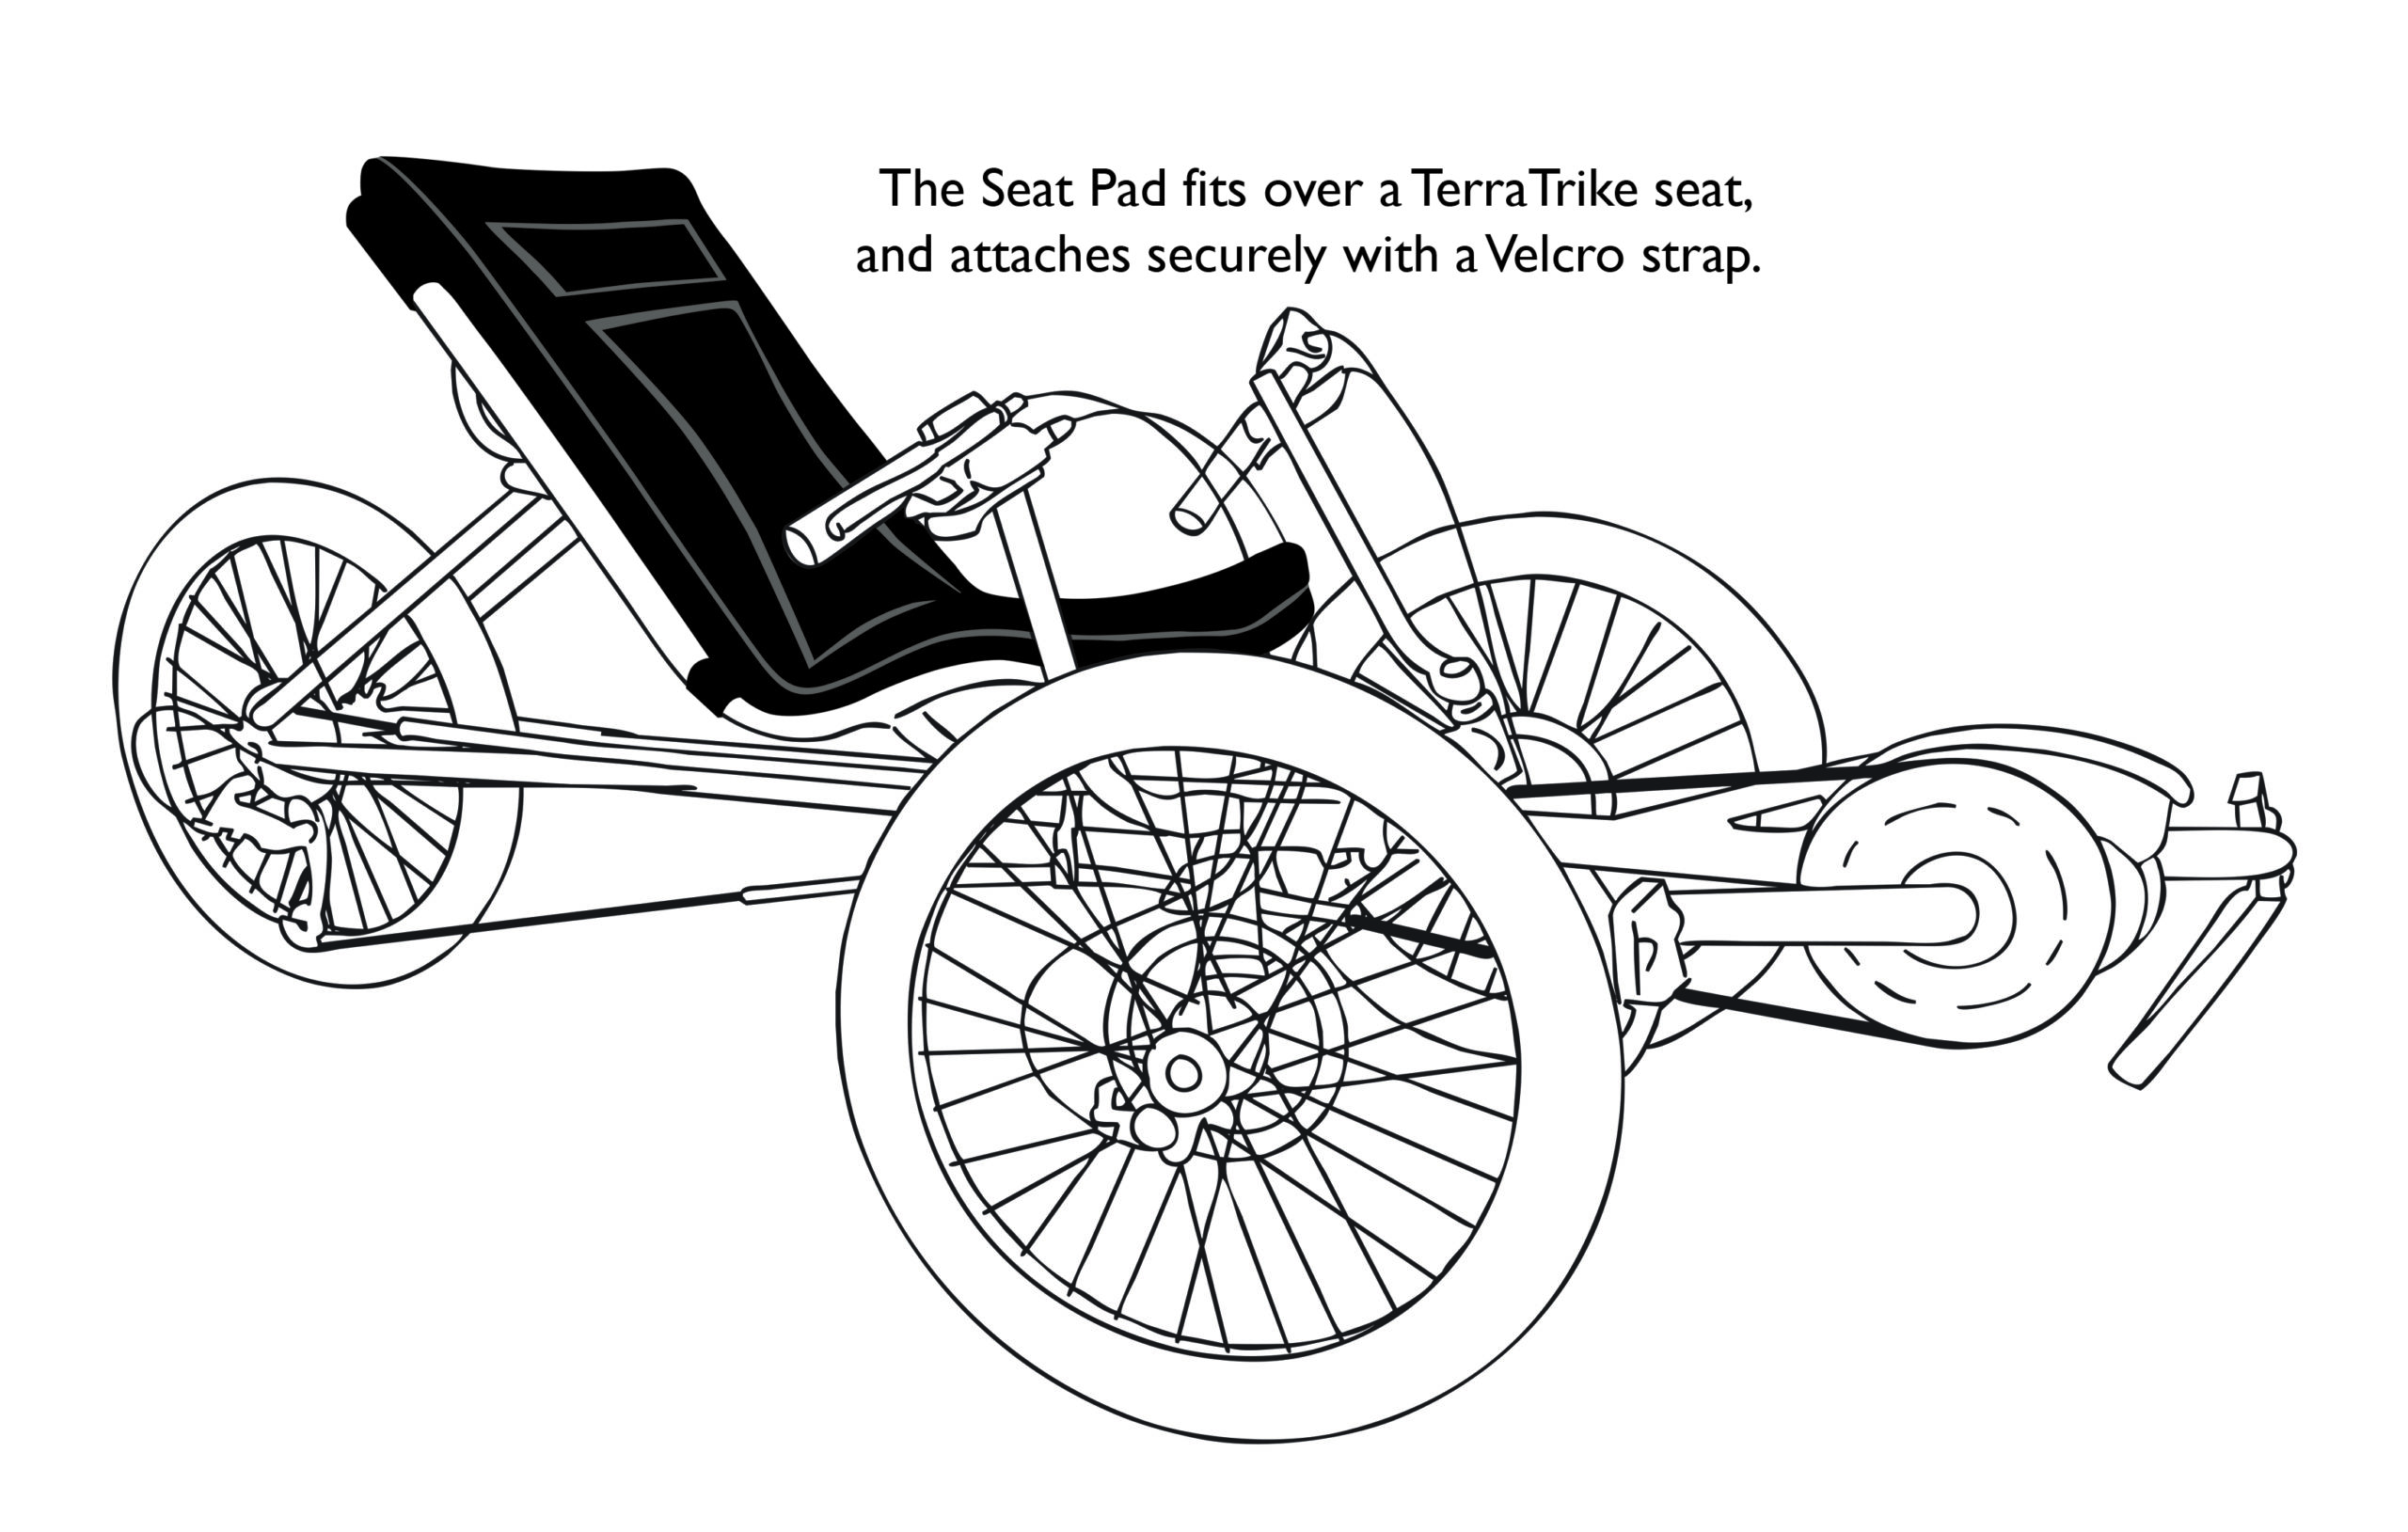 Seat Wedge Cushion - Extended Width - TerraTrike